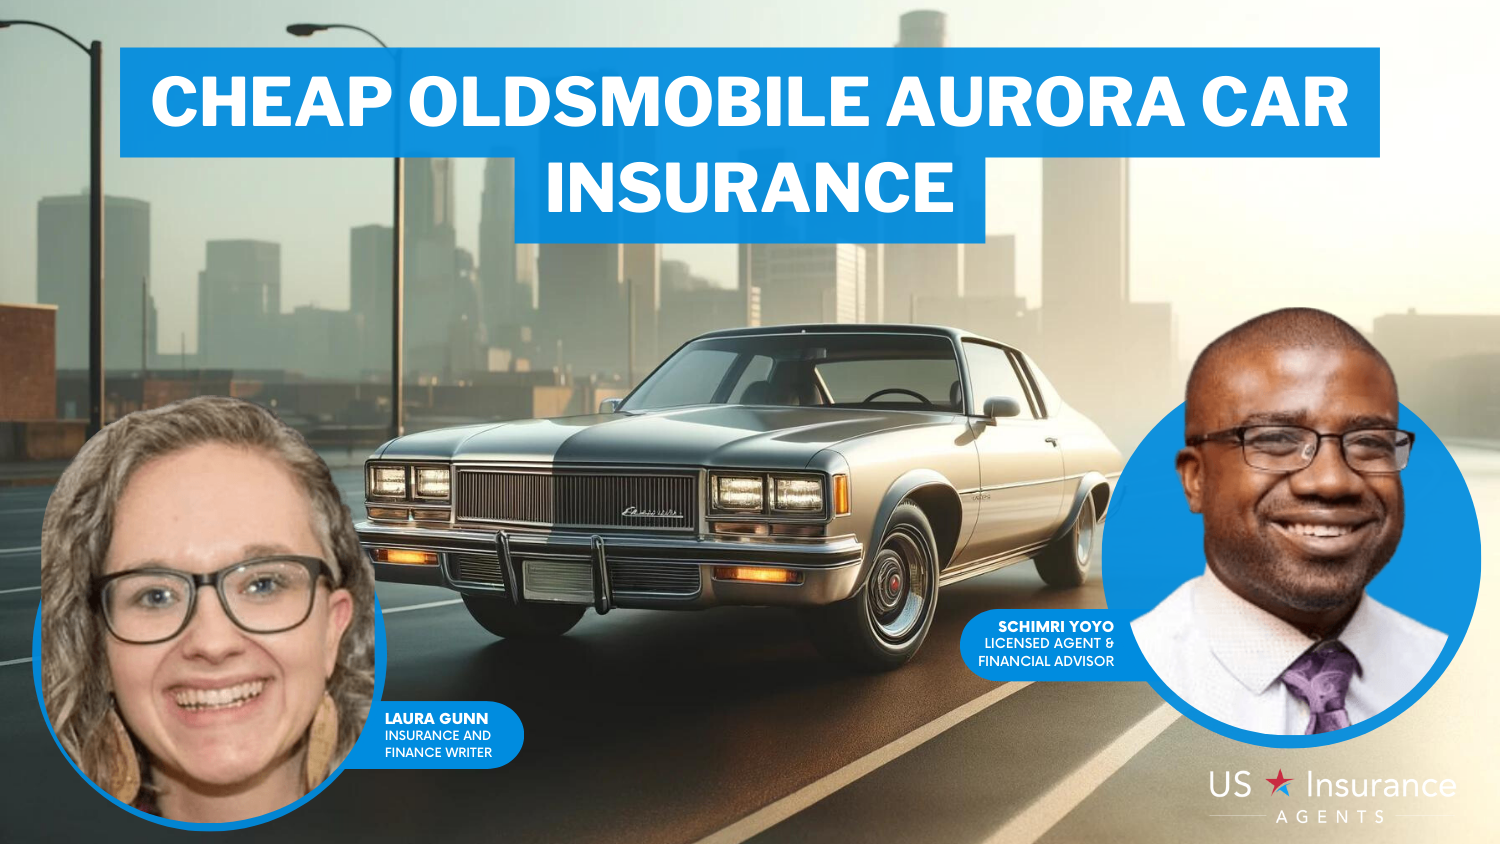 Cheap Oldsmobile Aurora Car Insurance: State Farm, USAA, and Progressive